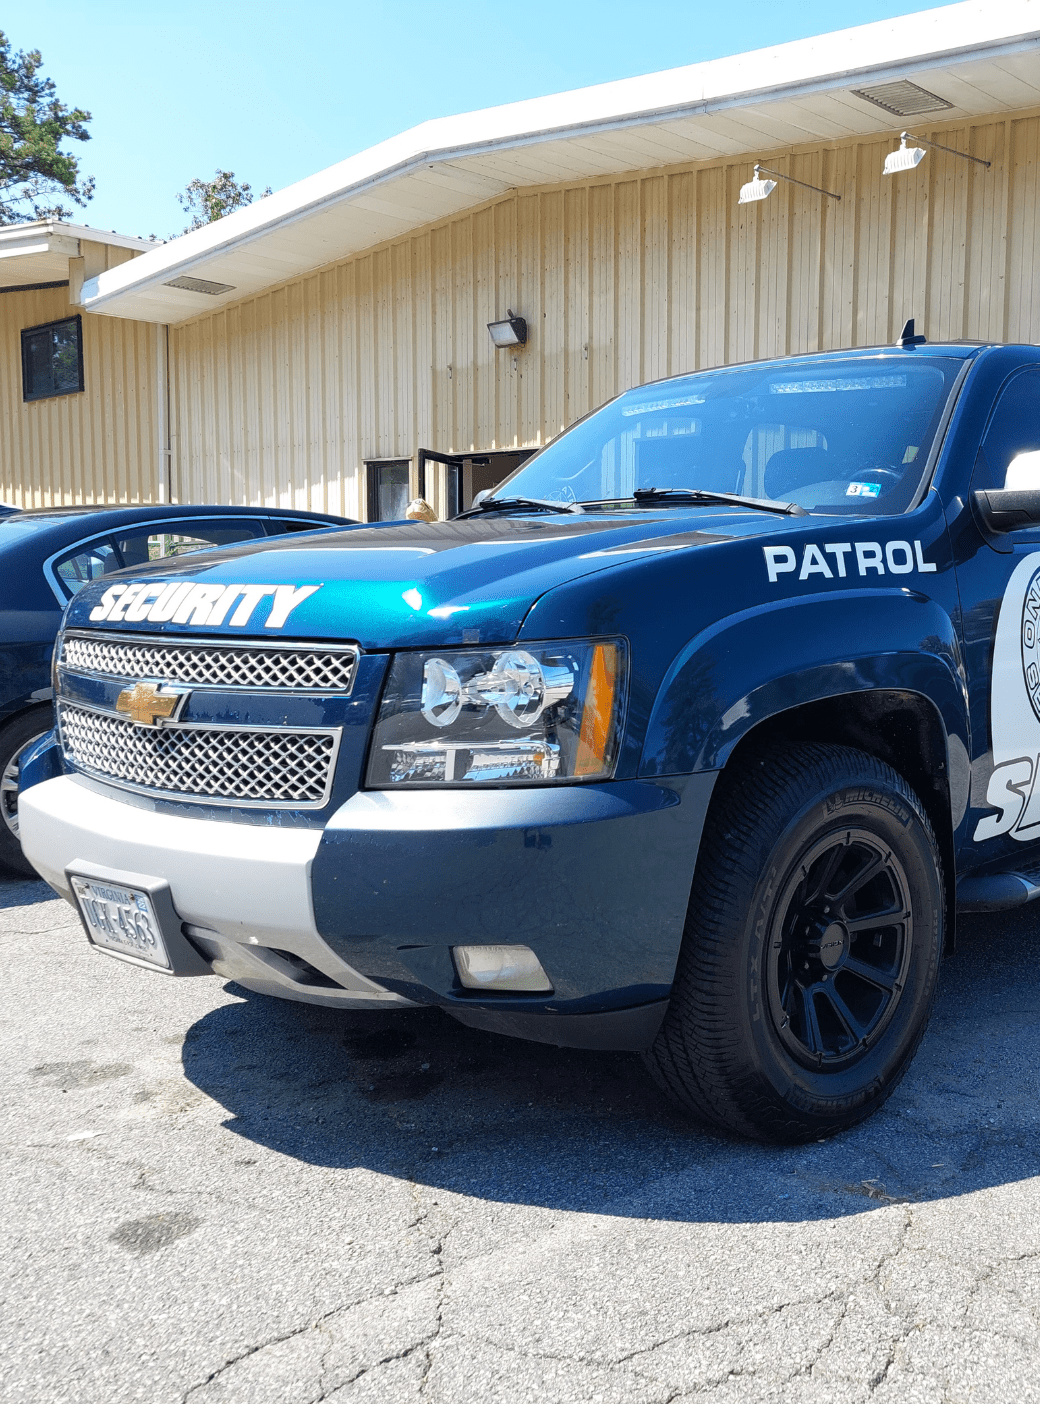 Patrol Service